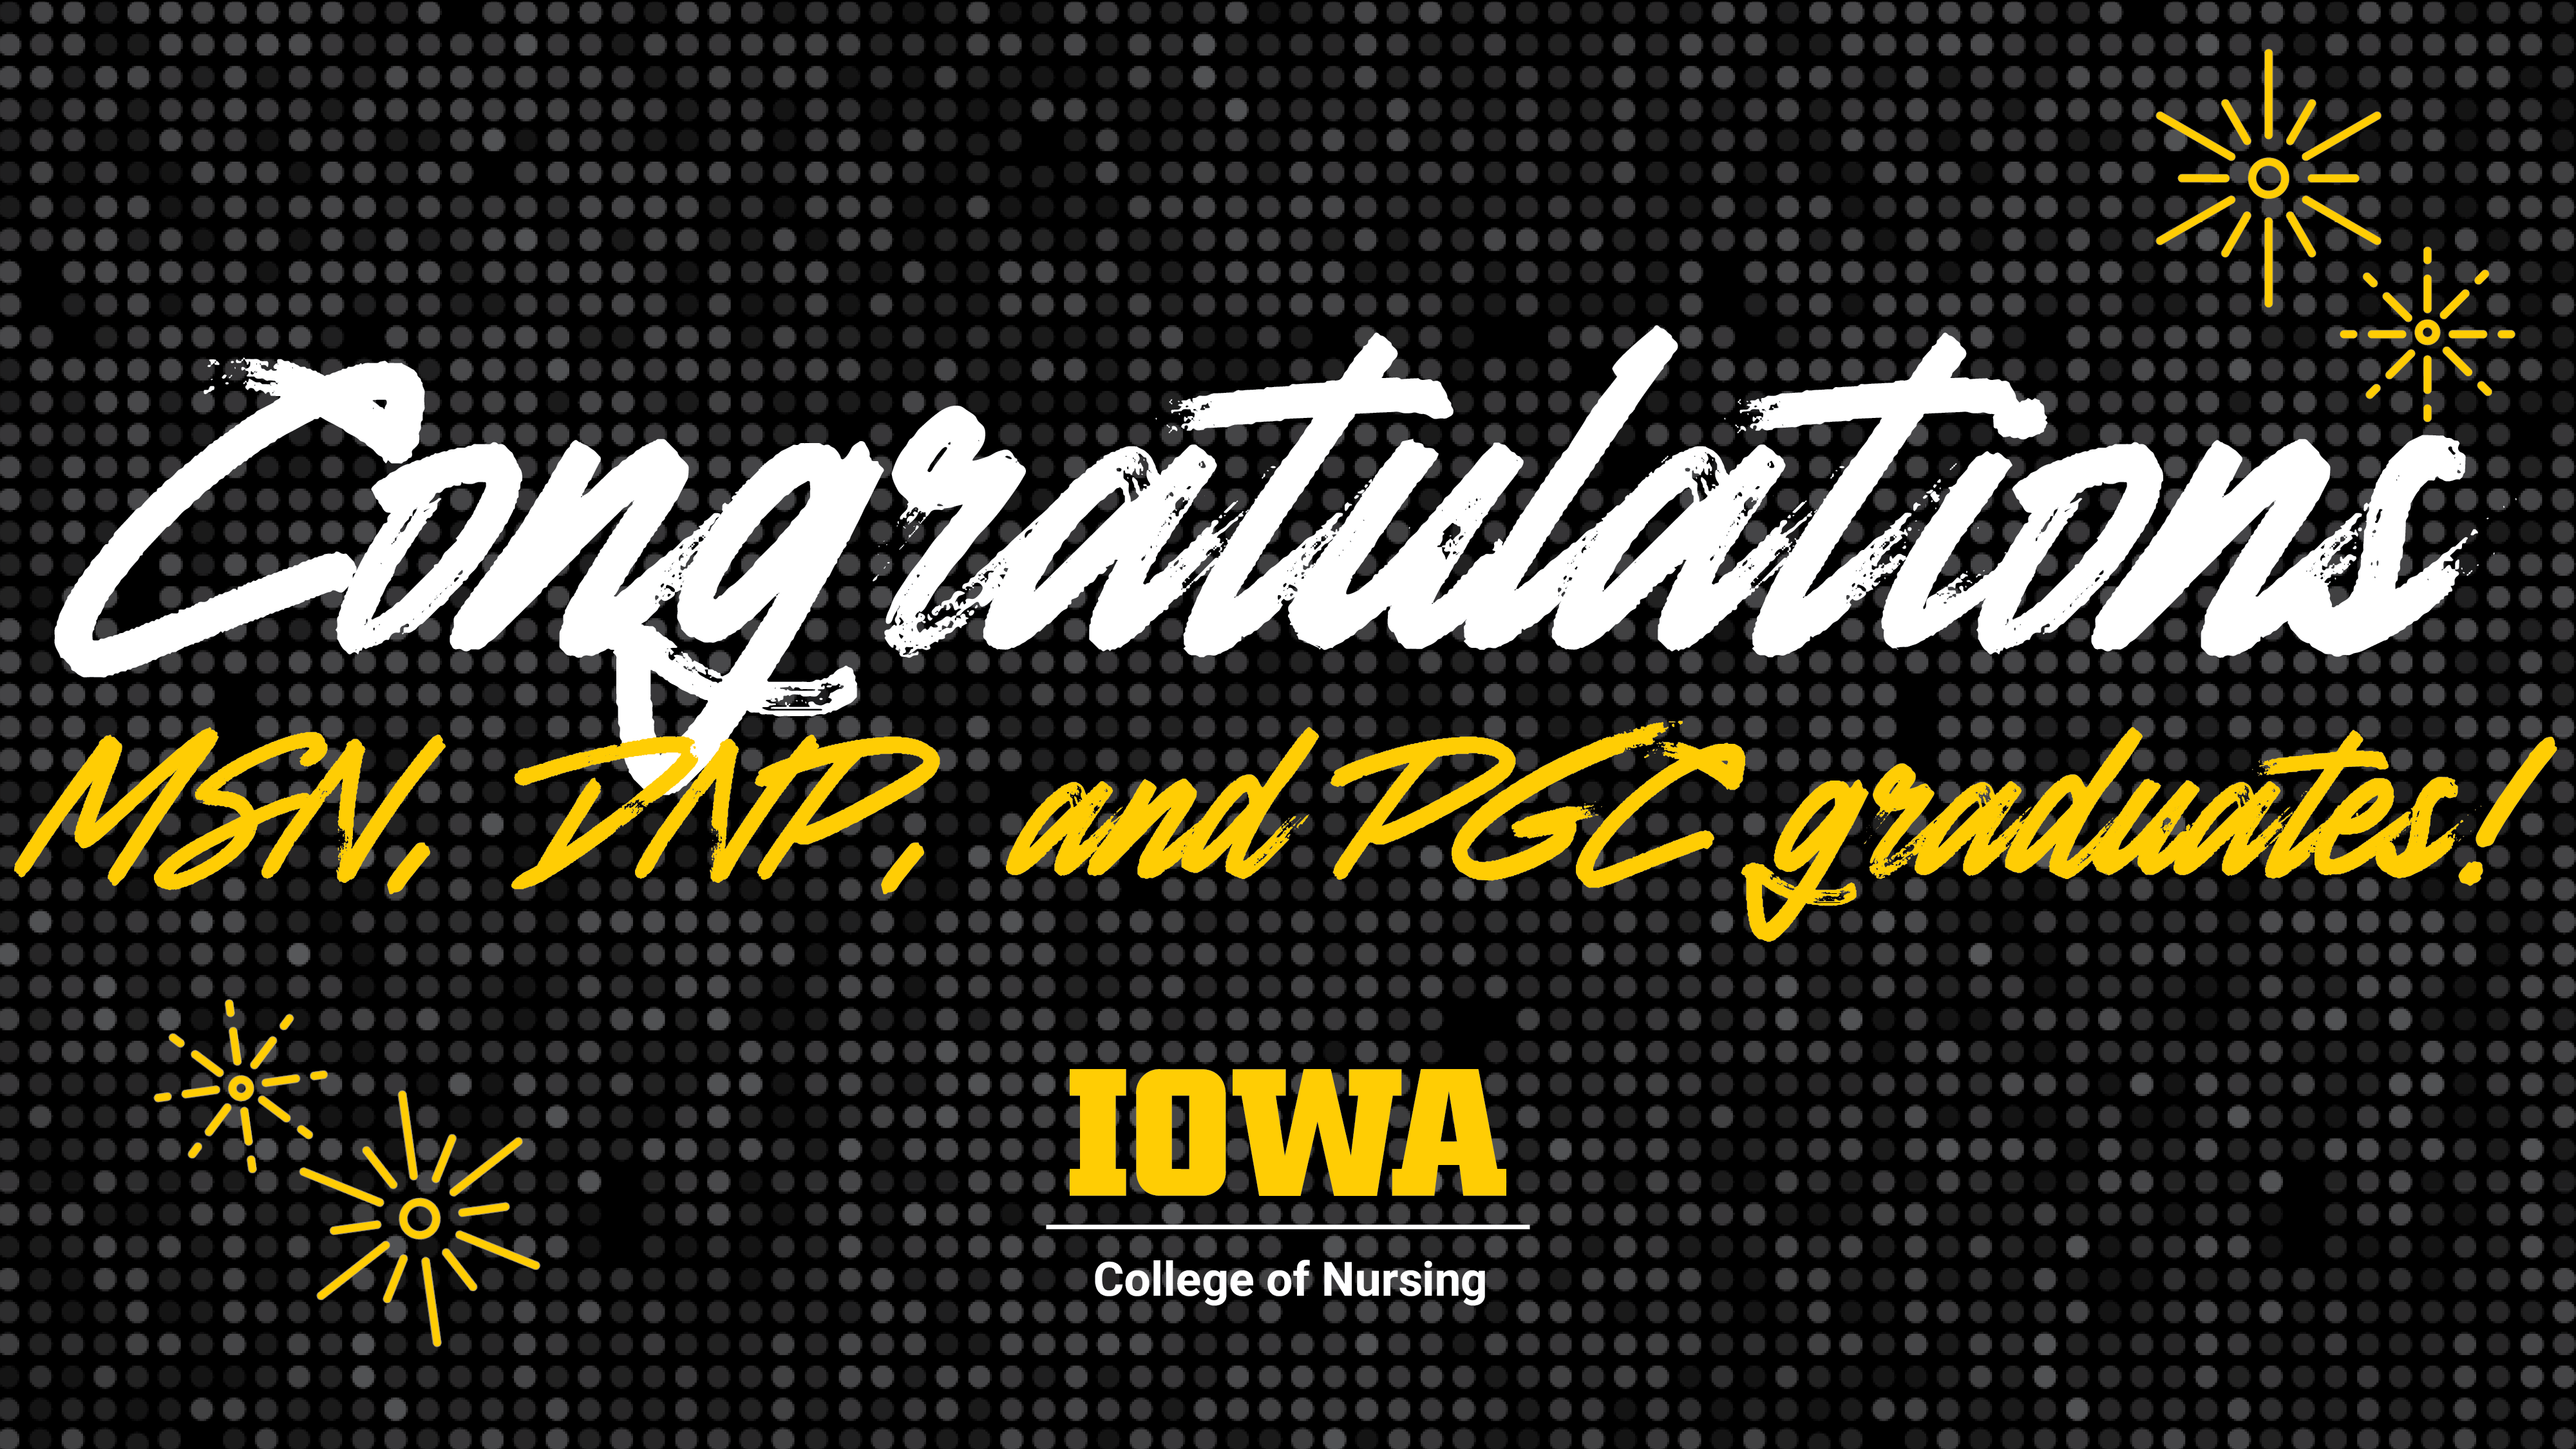 Congratulations MSN, DNP, and PGC graduates!